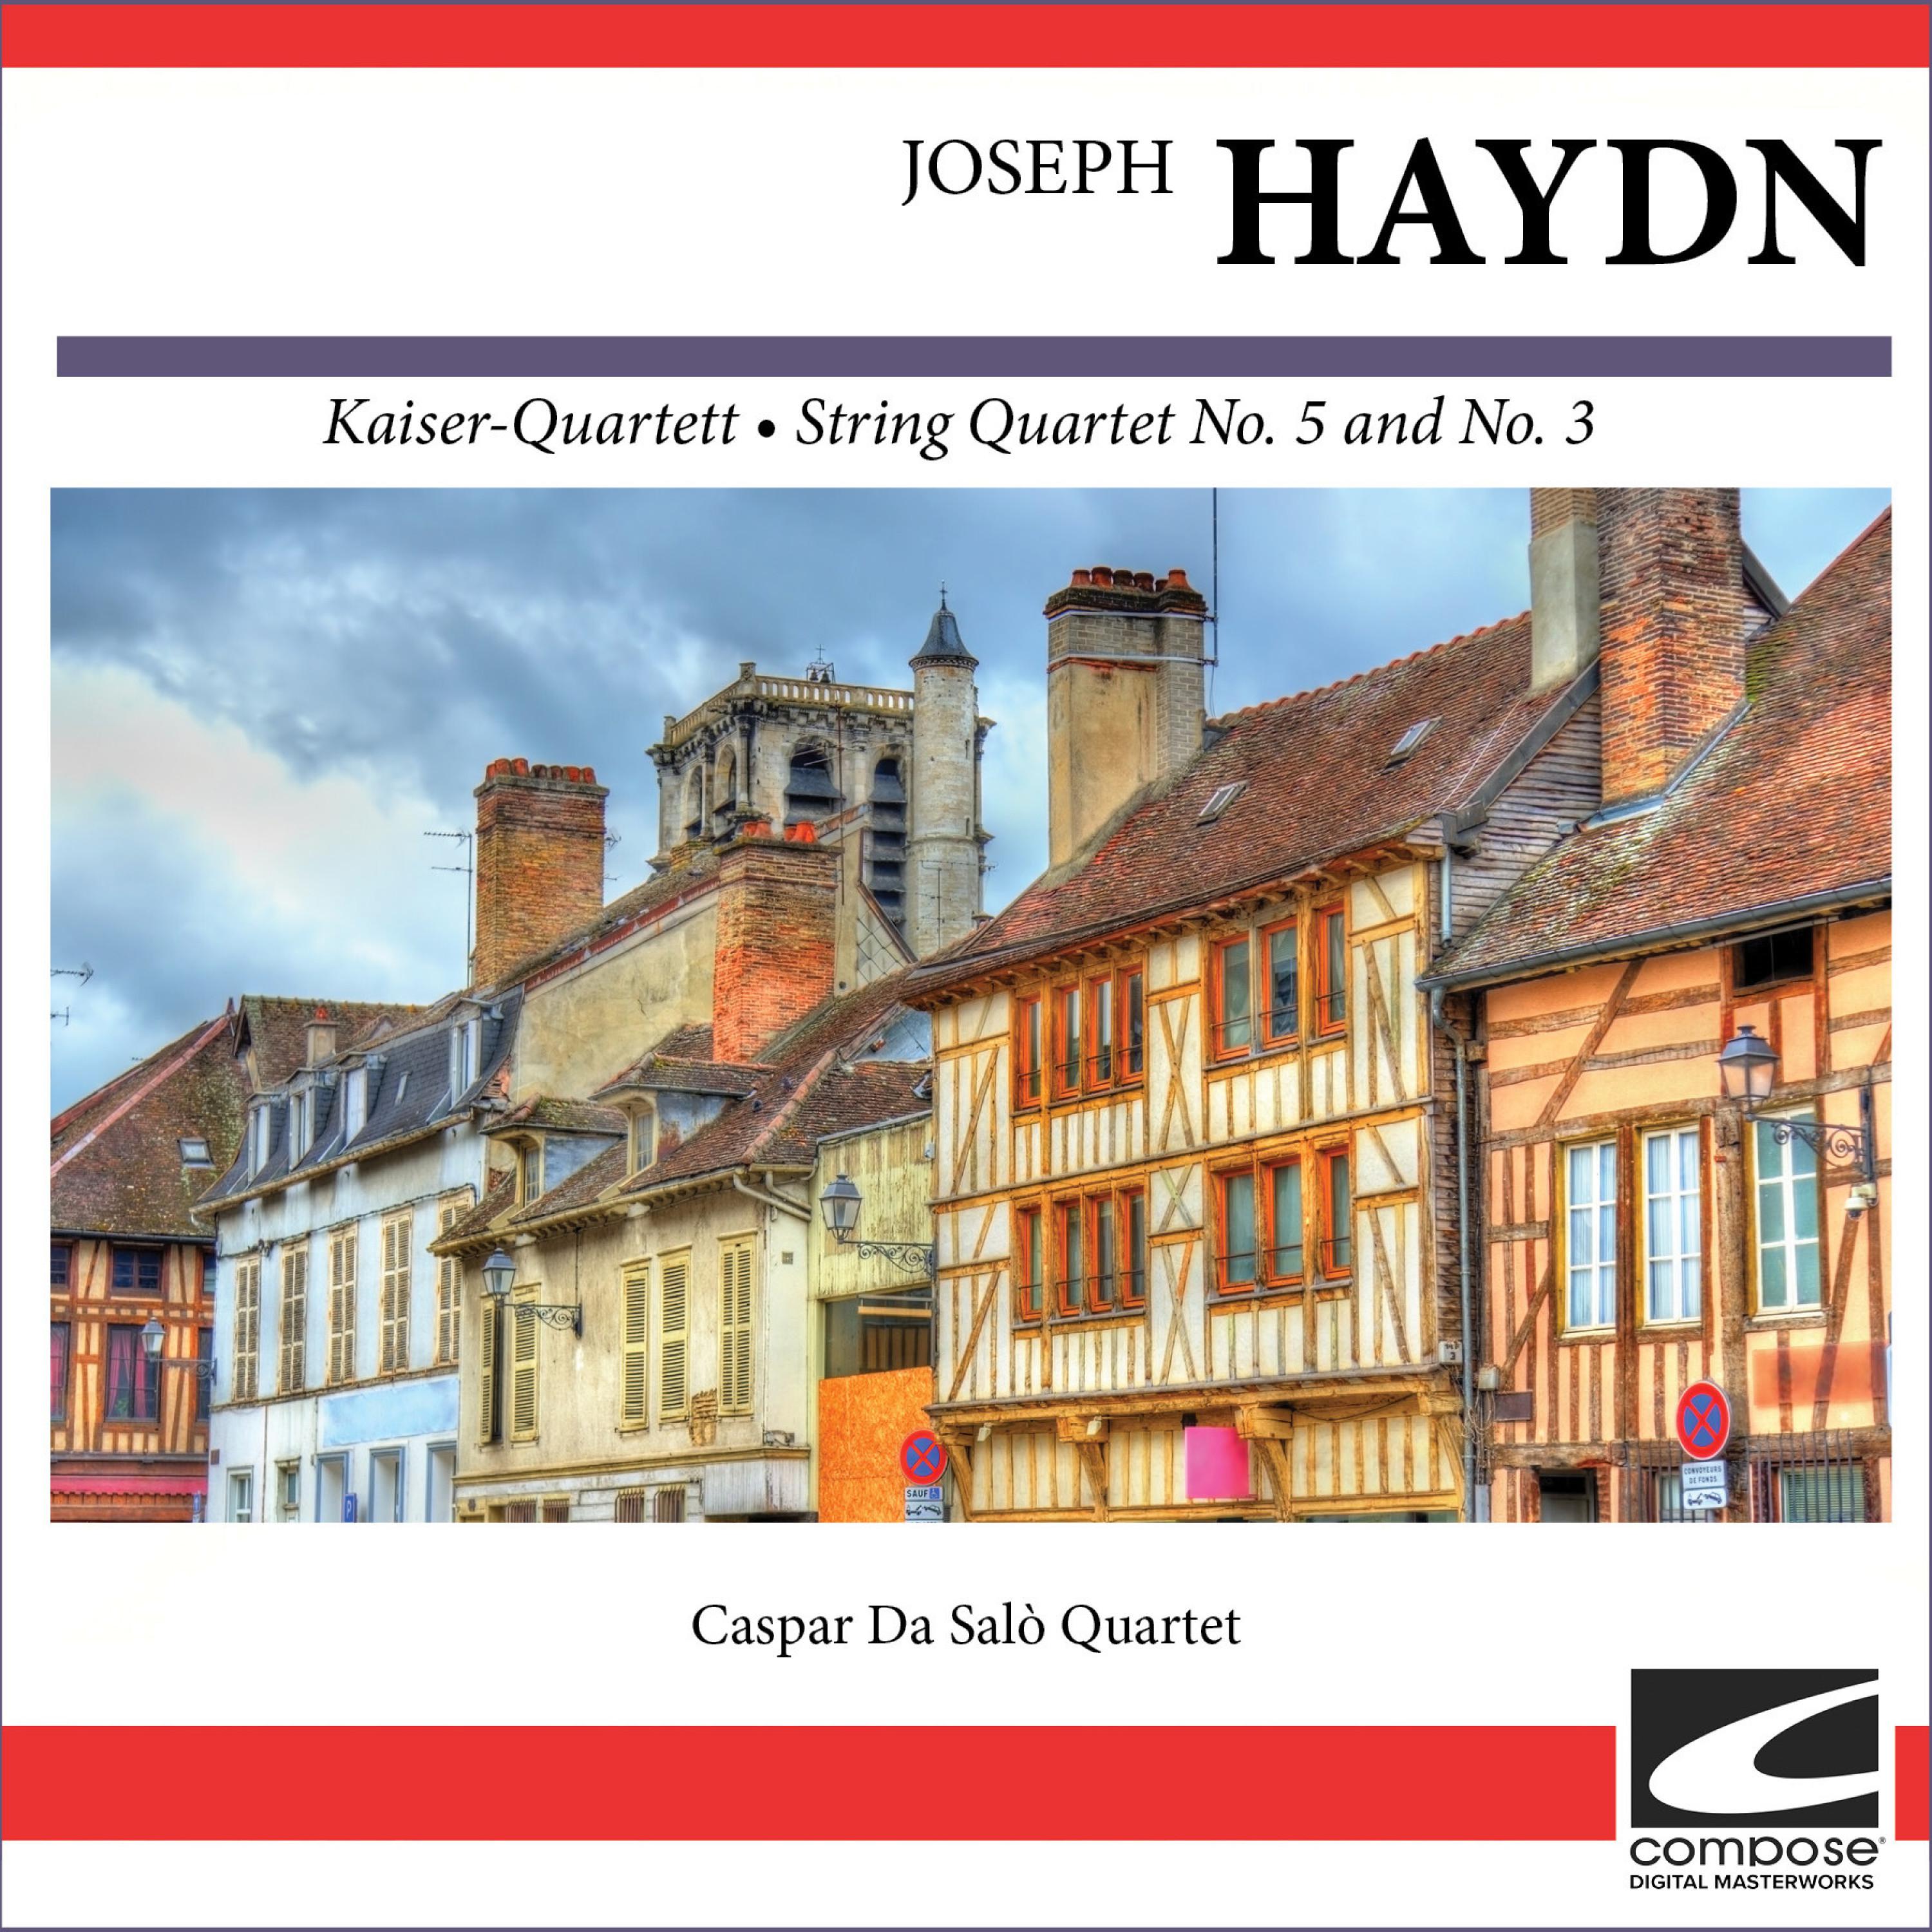 Caspar da Salo Quartet - Haydn String Quartet Op. 76 No. 3 in C major 'Emperor Quartet' - Finale-Presto